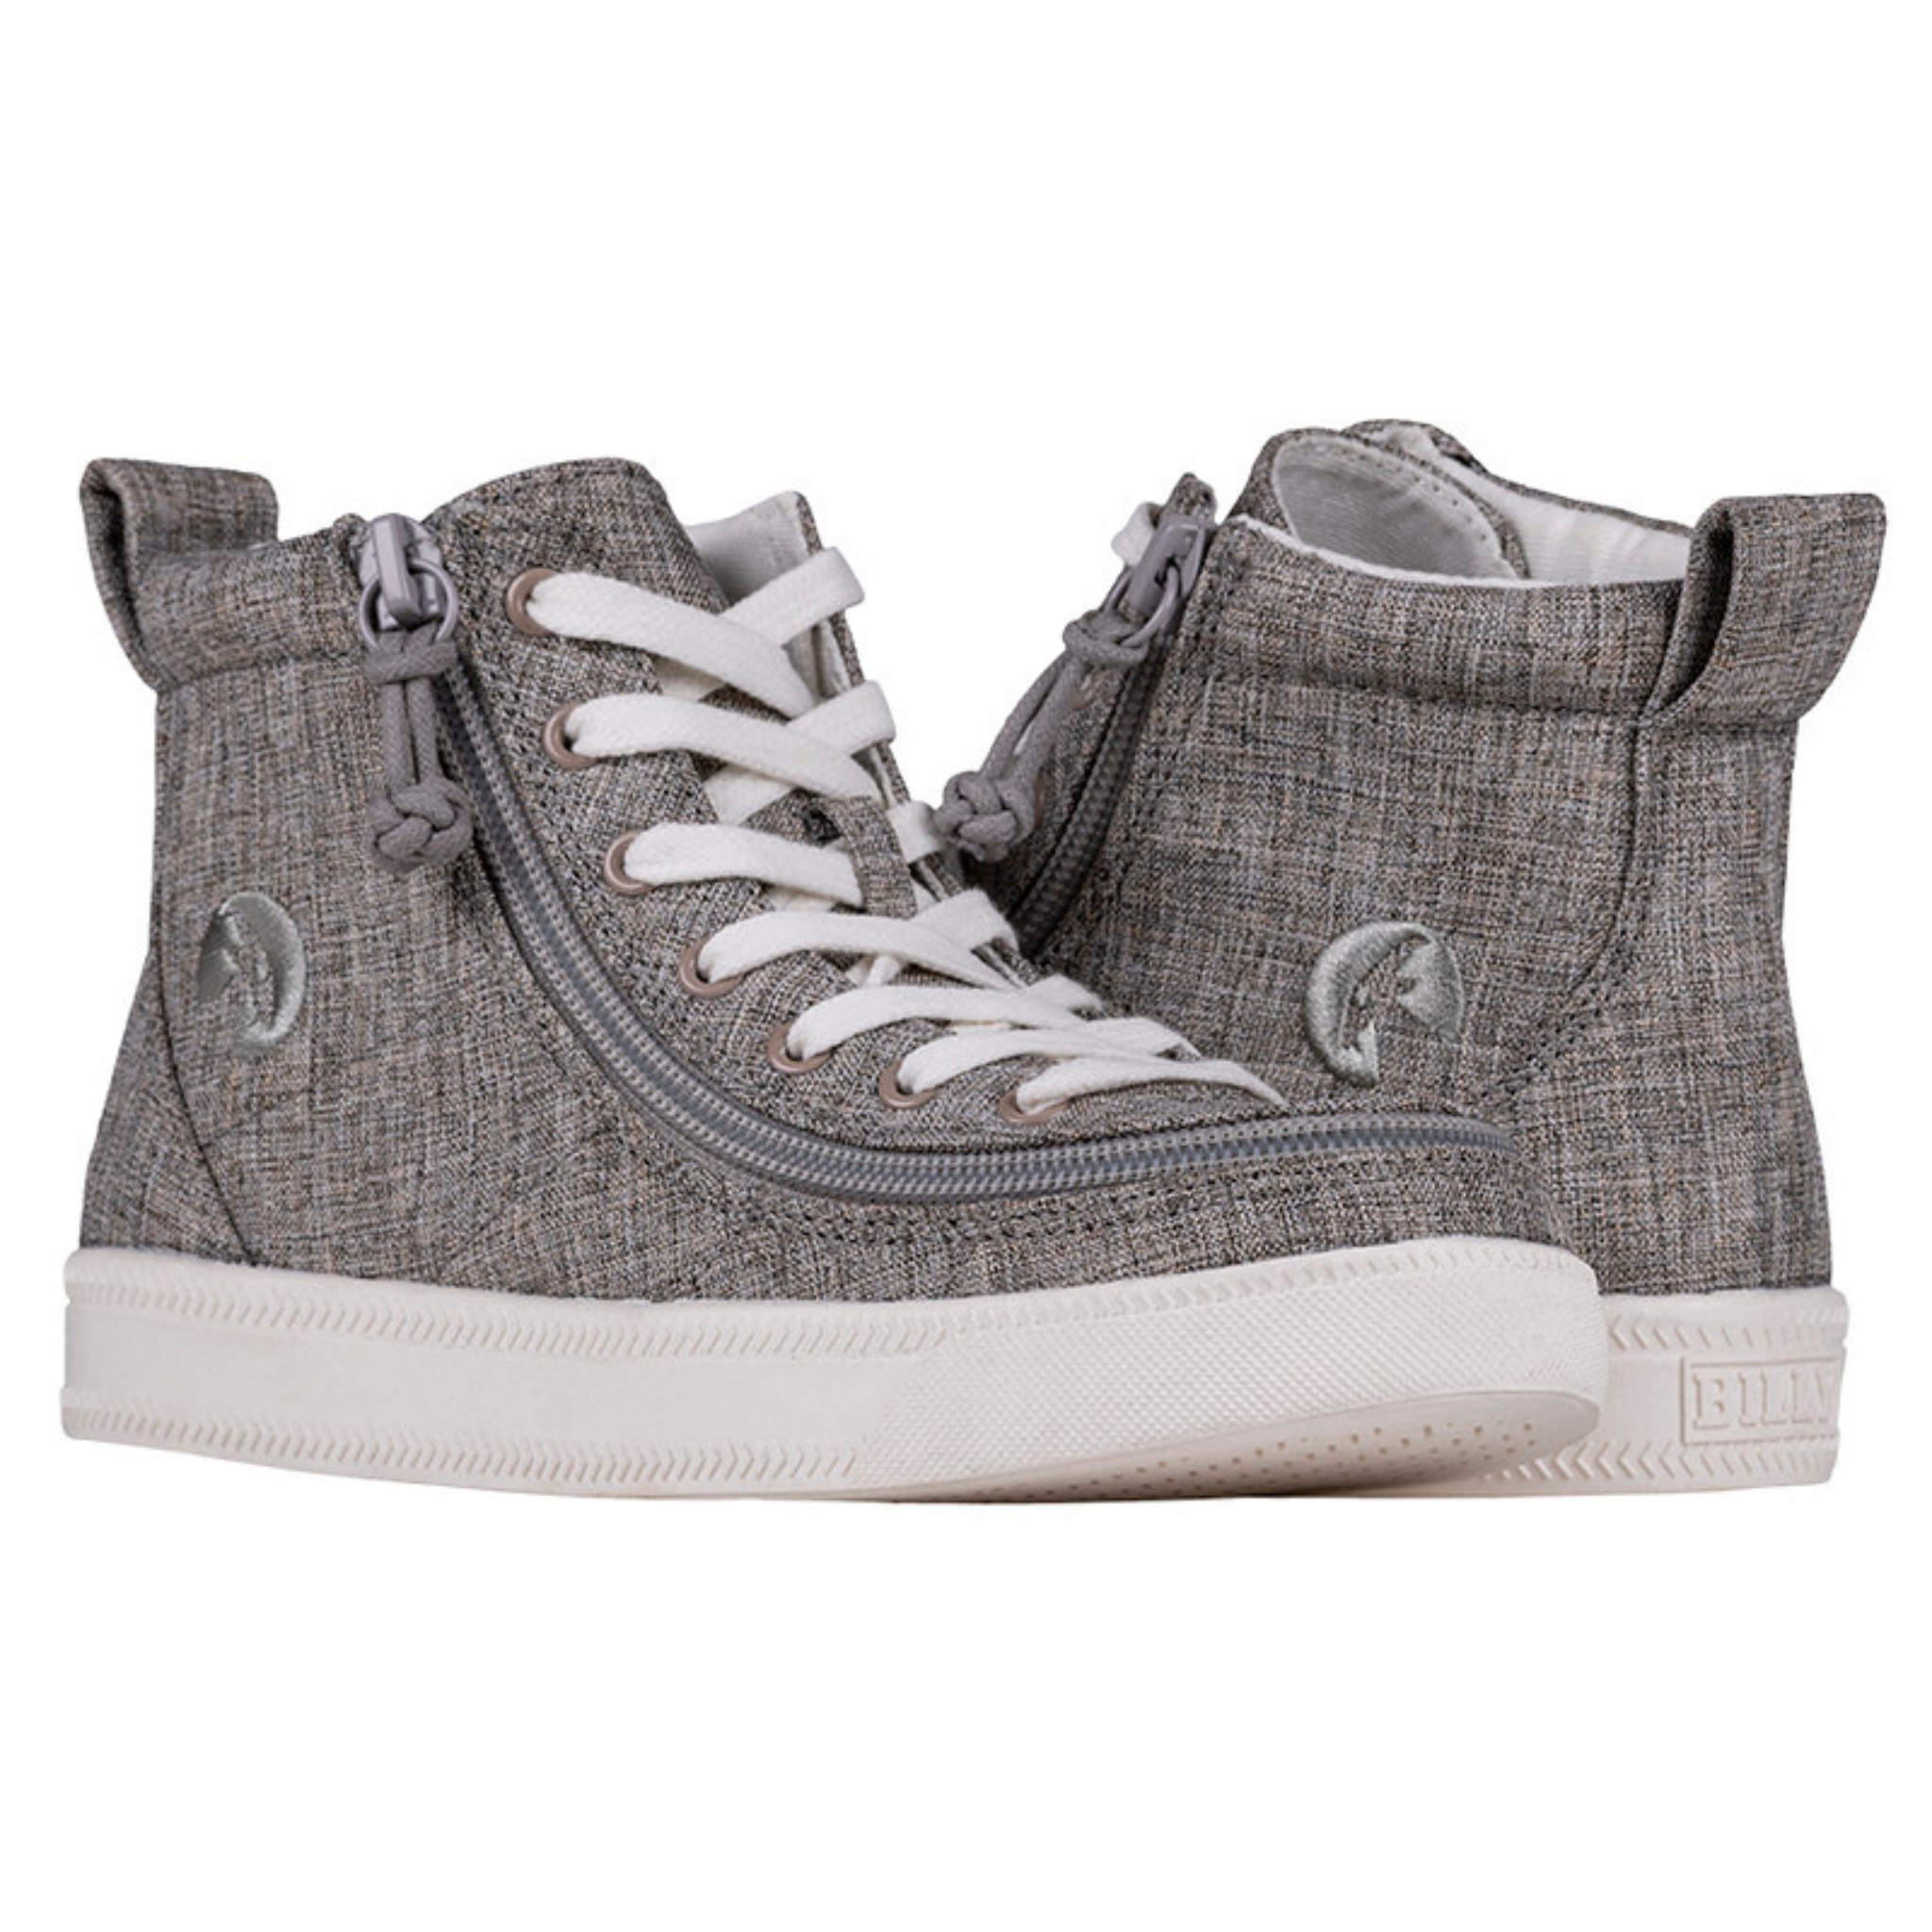 Billy Footwear (Kids) - High Top Linen Shoes Darker Grey Jersey